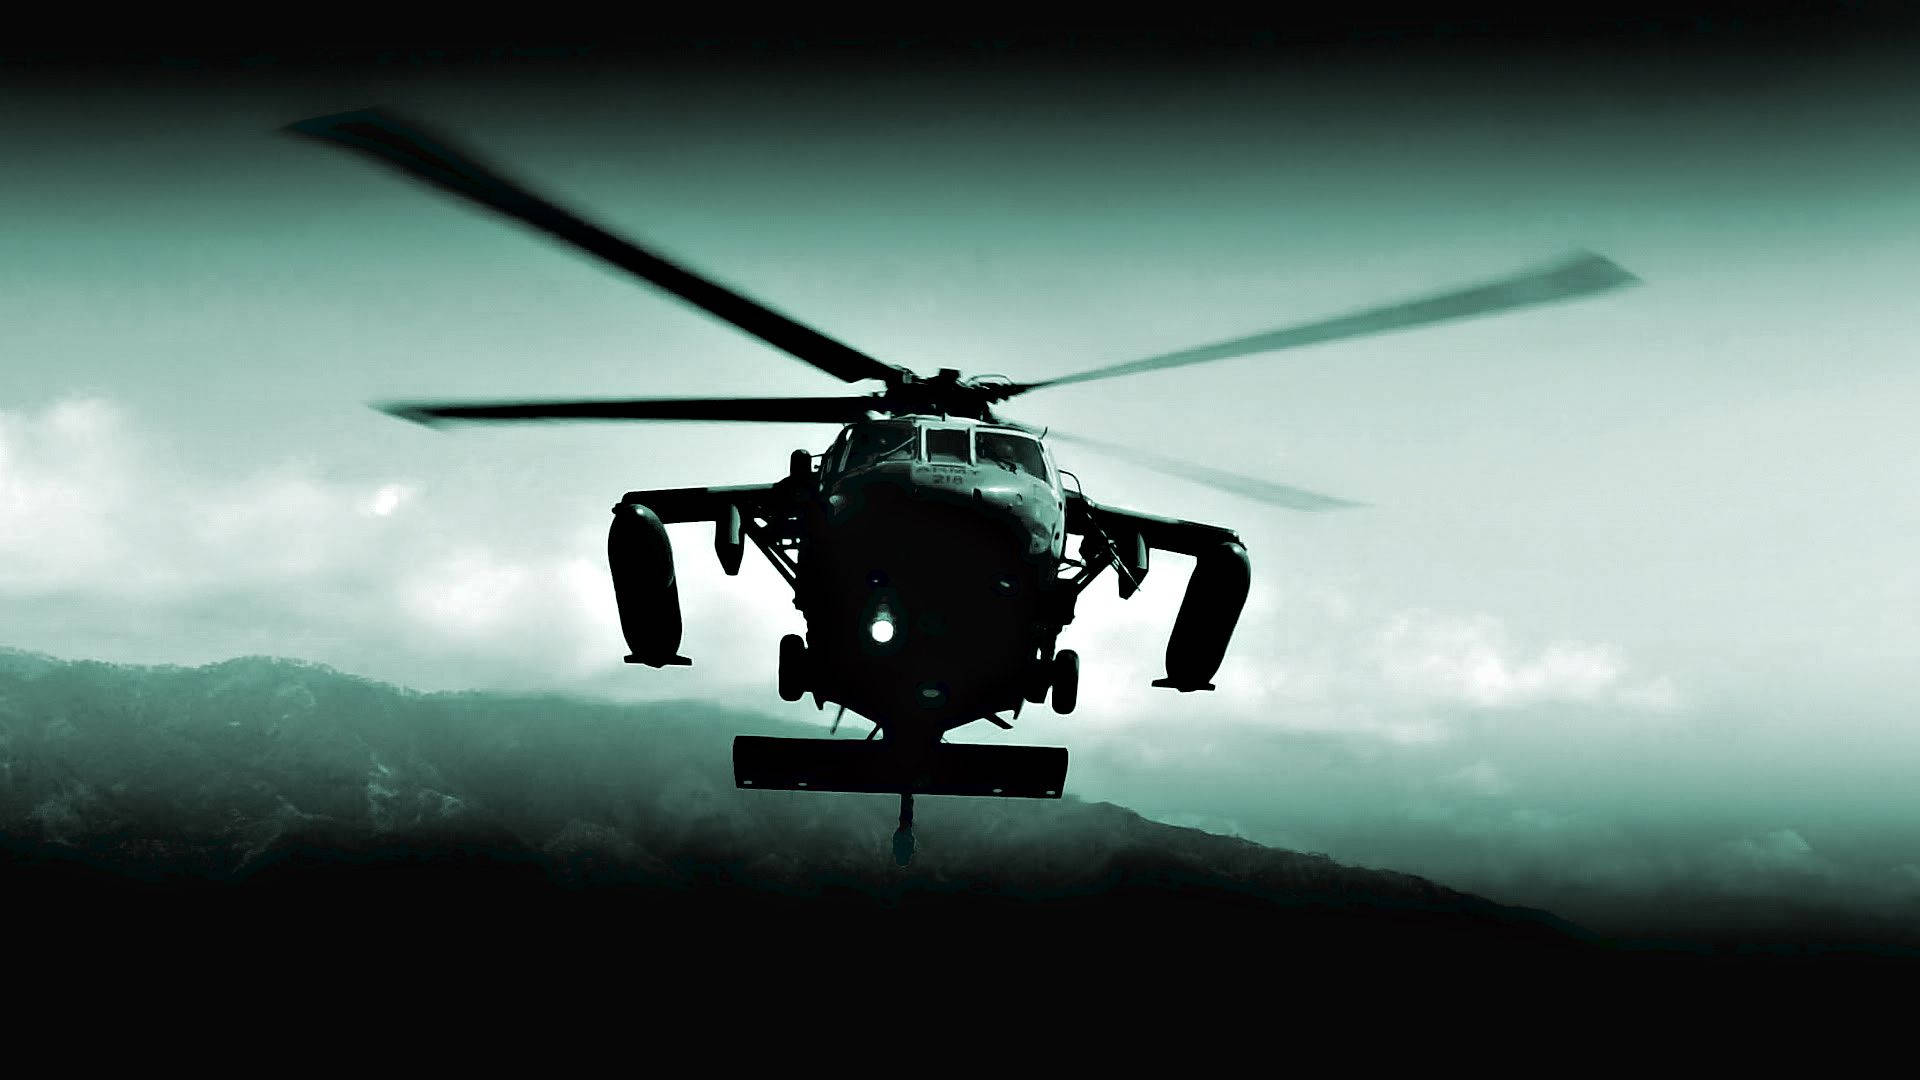 Envy Av En Amerikansk Armé Black Hawk-helikopter I Aktion. Wallpaper